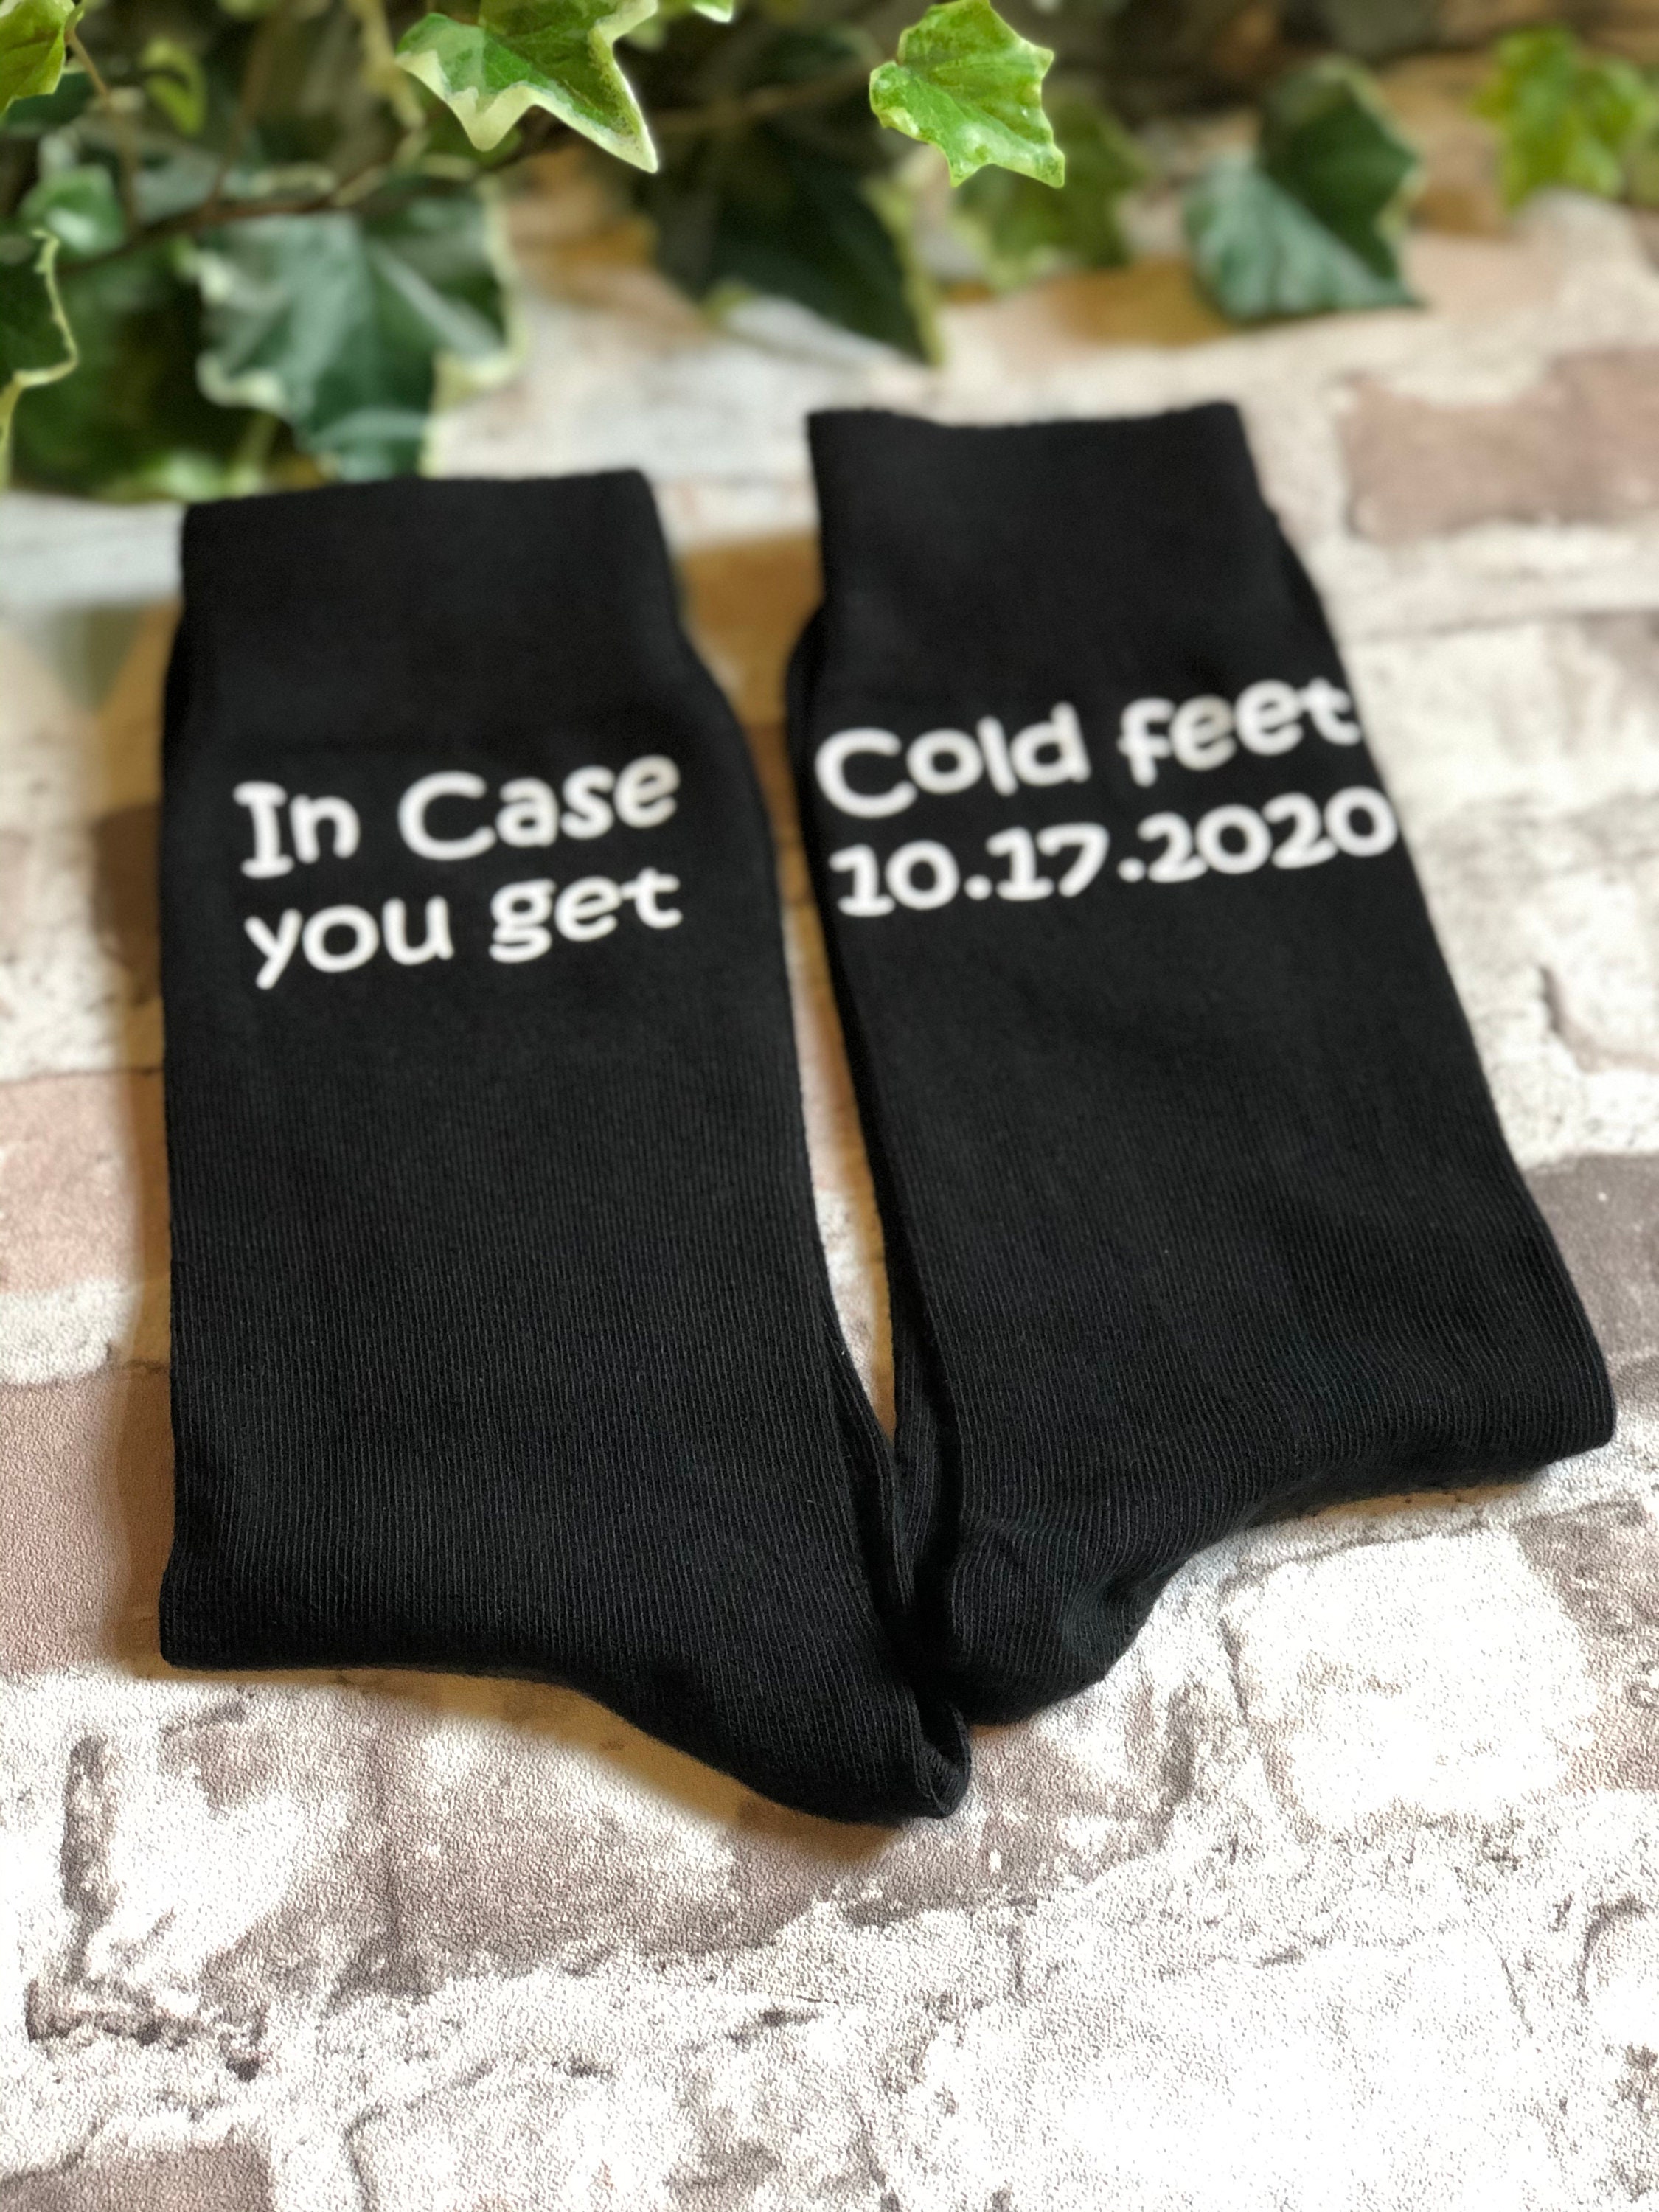 In Case You Get Cold Feet Groom Socks Funny Verse Socks | Etsy